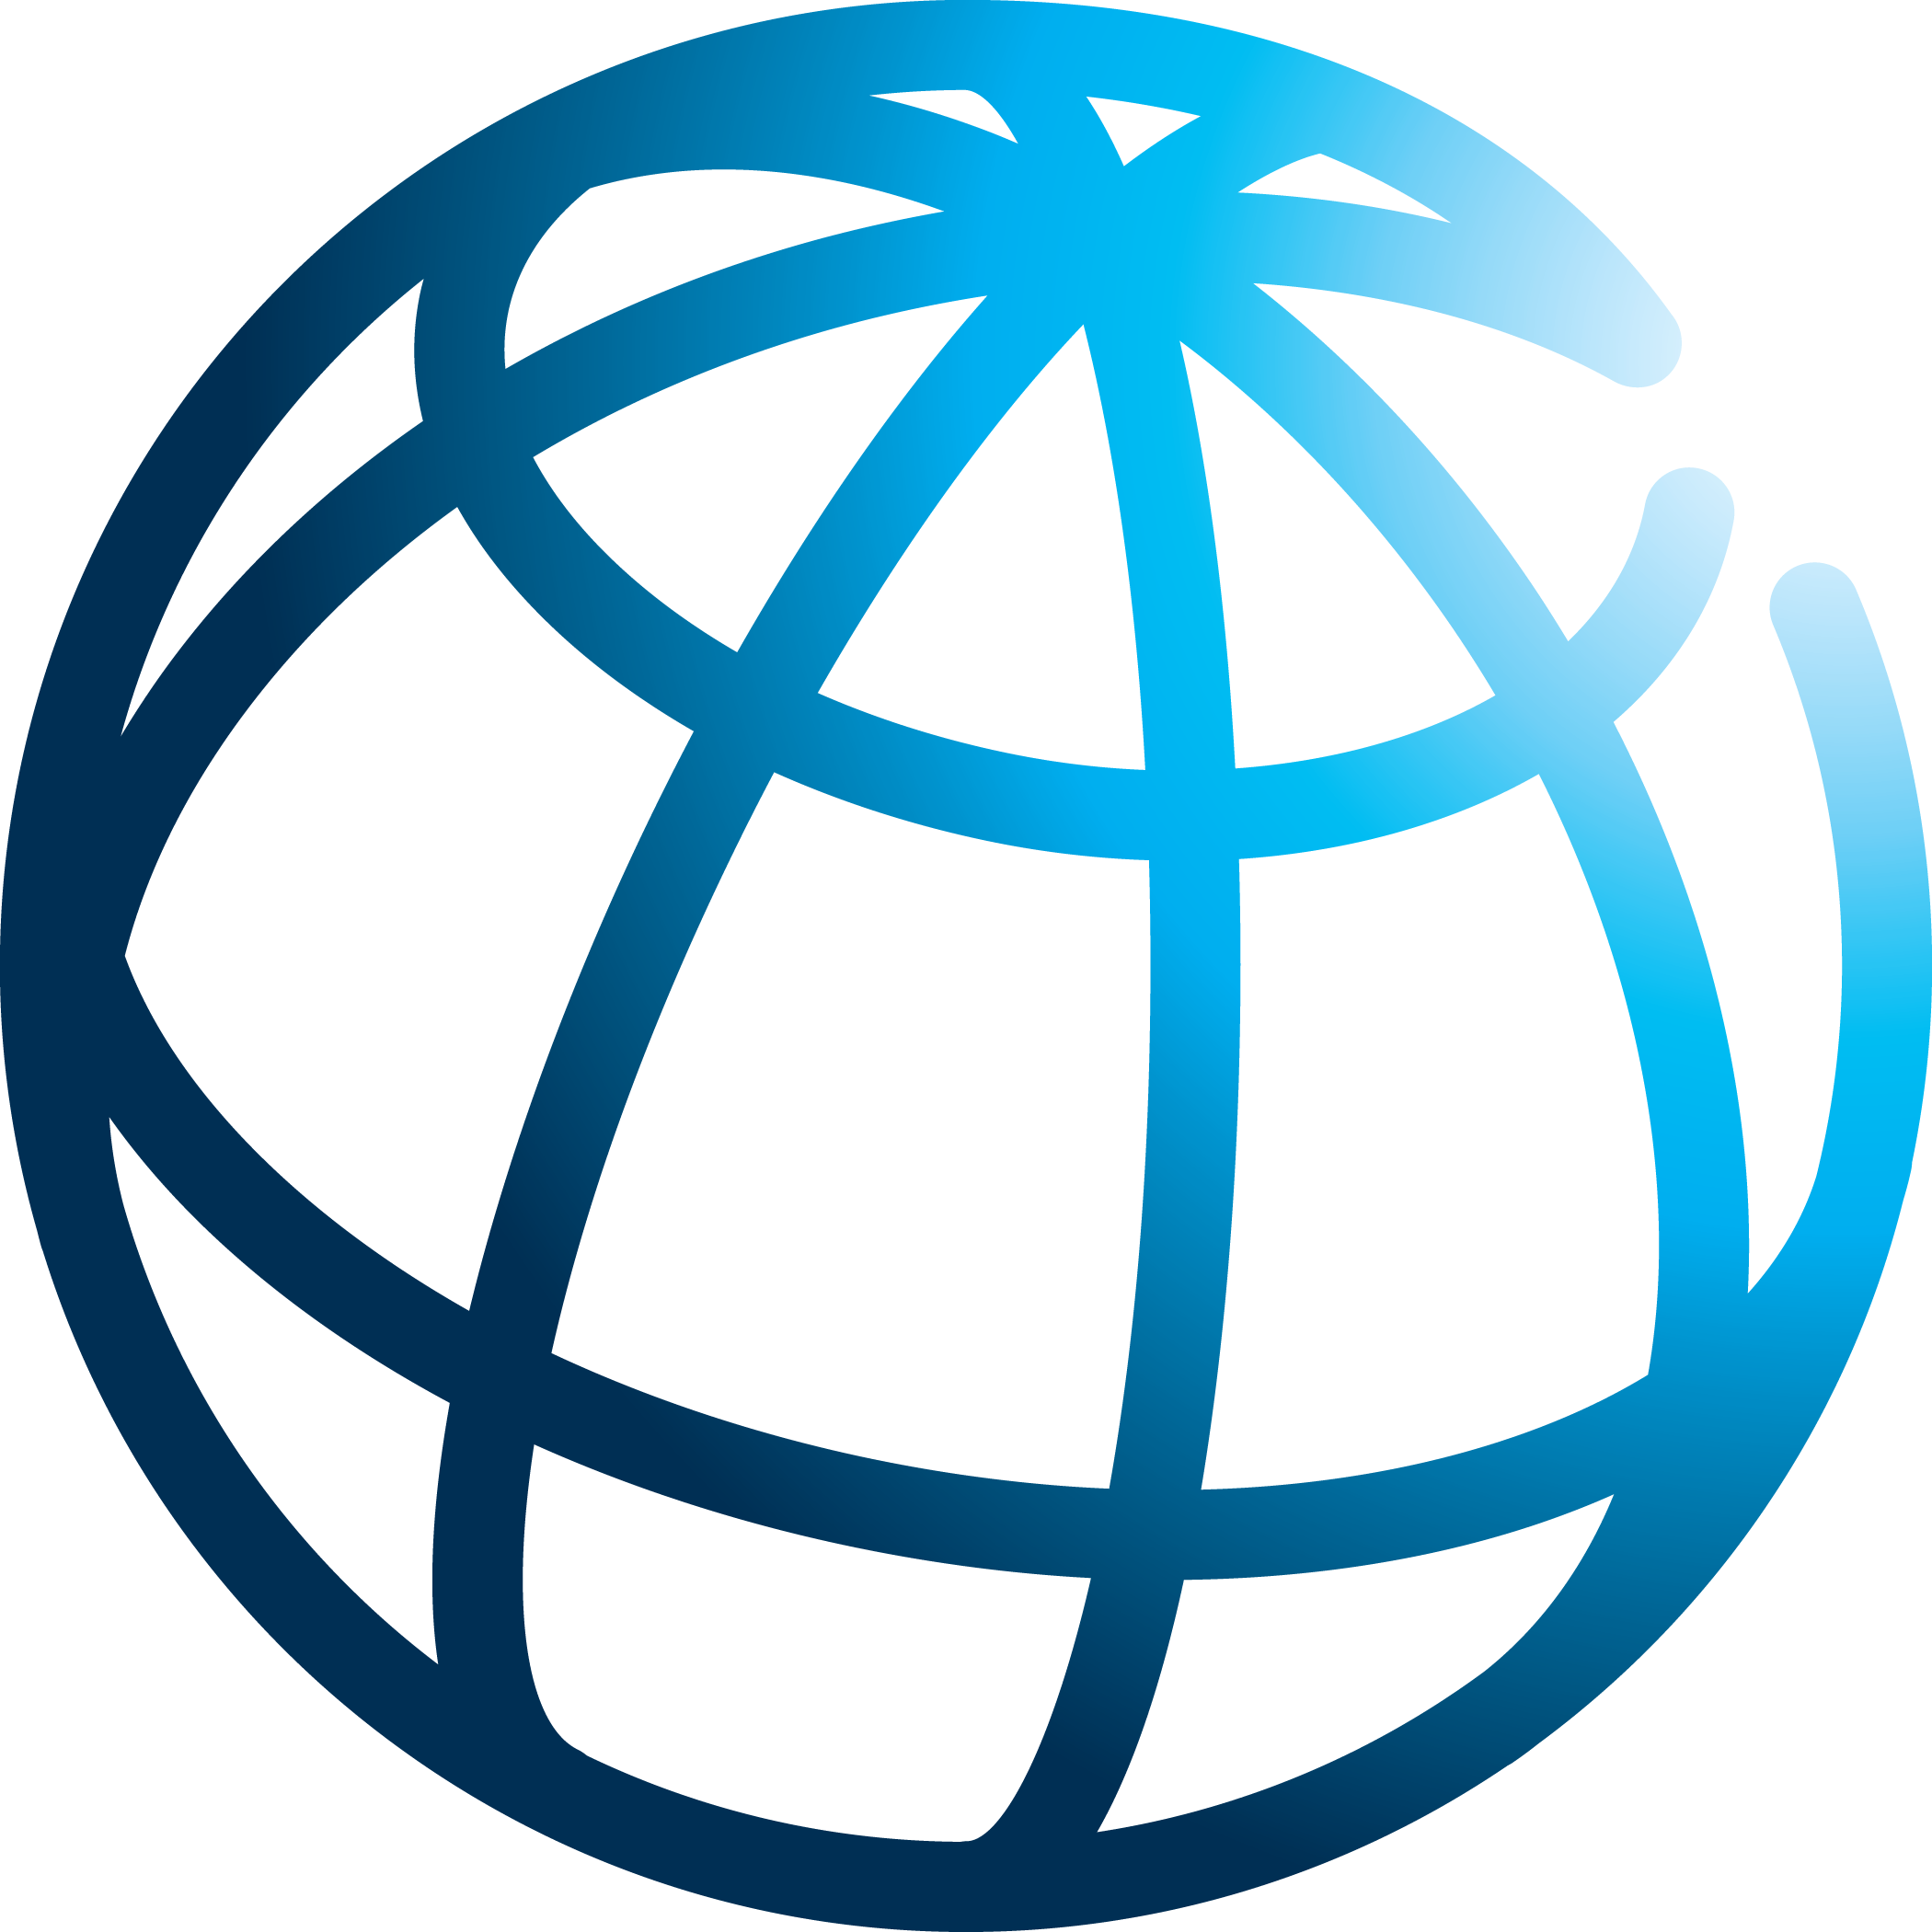 WB globe logo